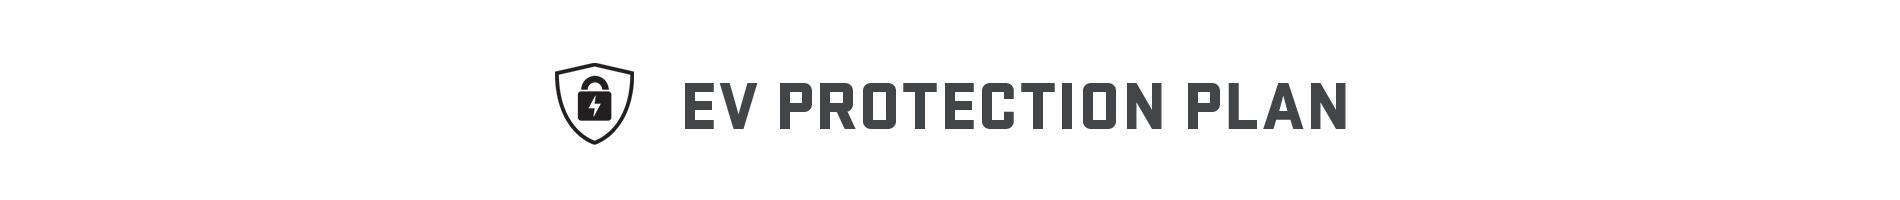 GMC EV Protection Plan Icon